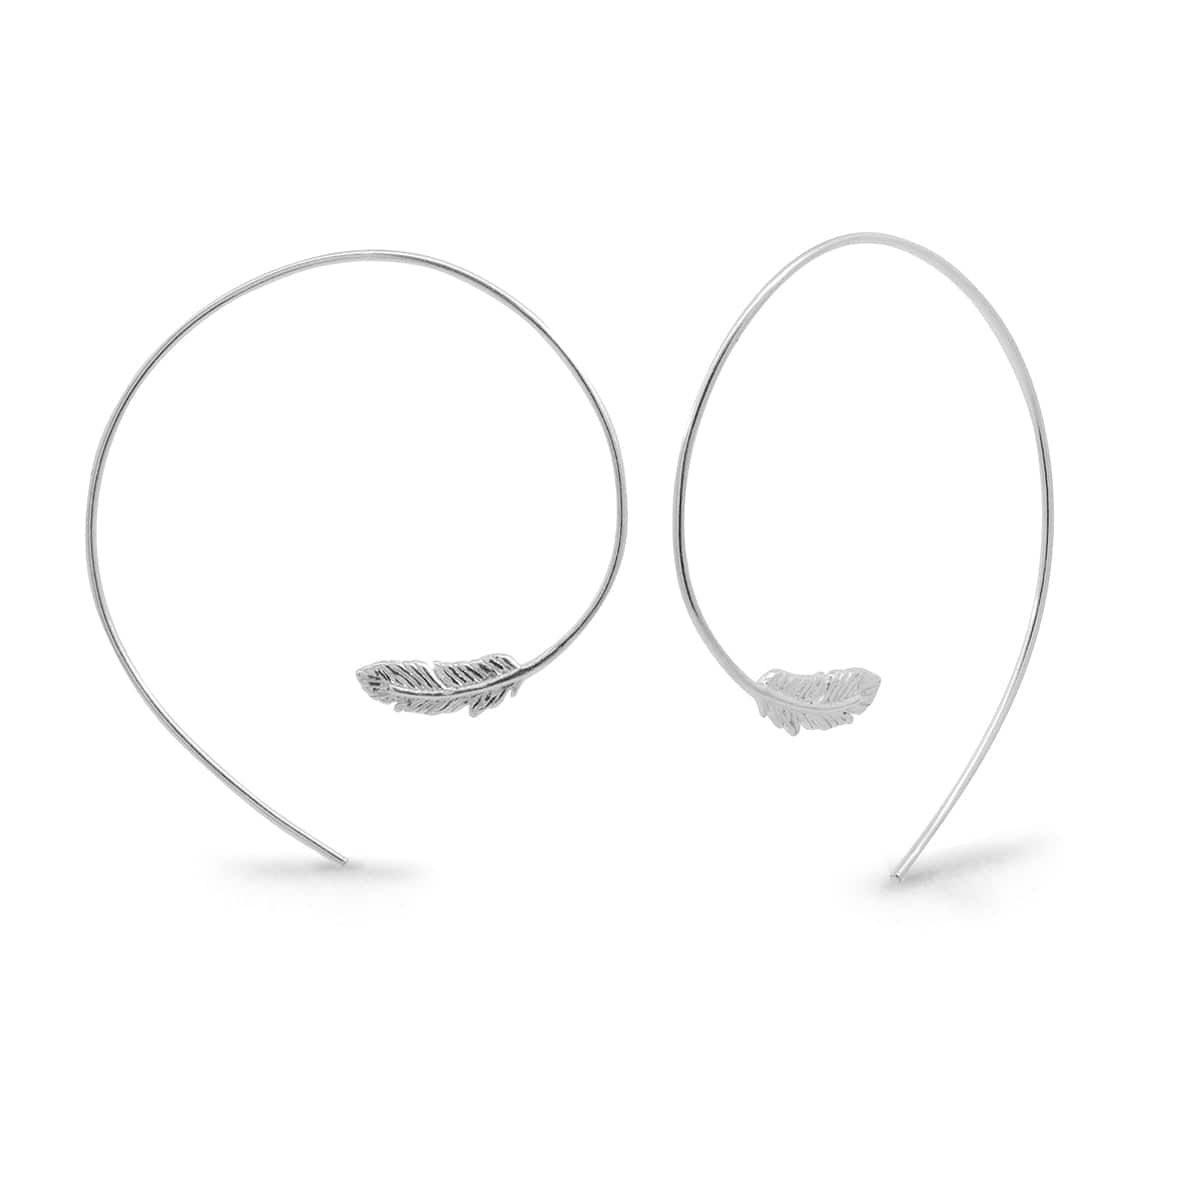 Boma Jewelry Earrings Feather Hoop Pull Through Earrings